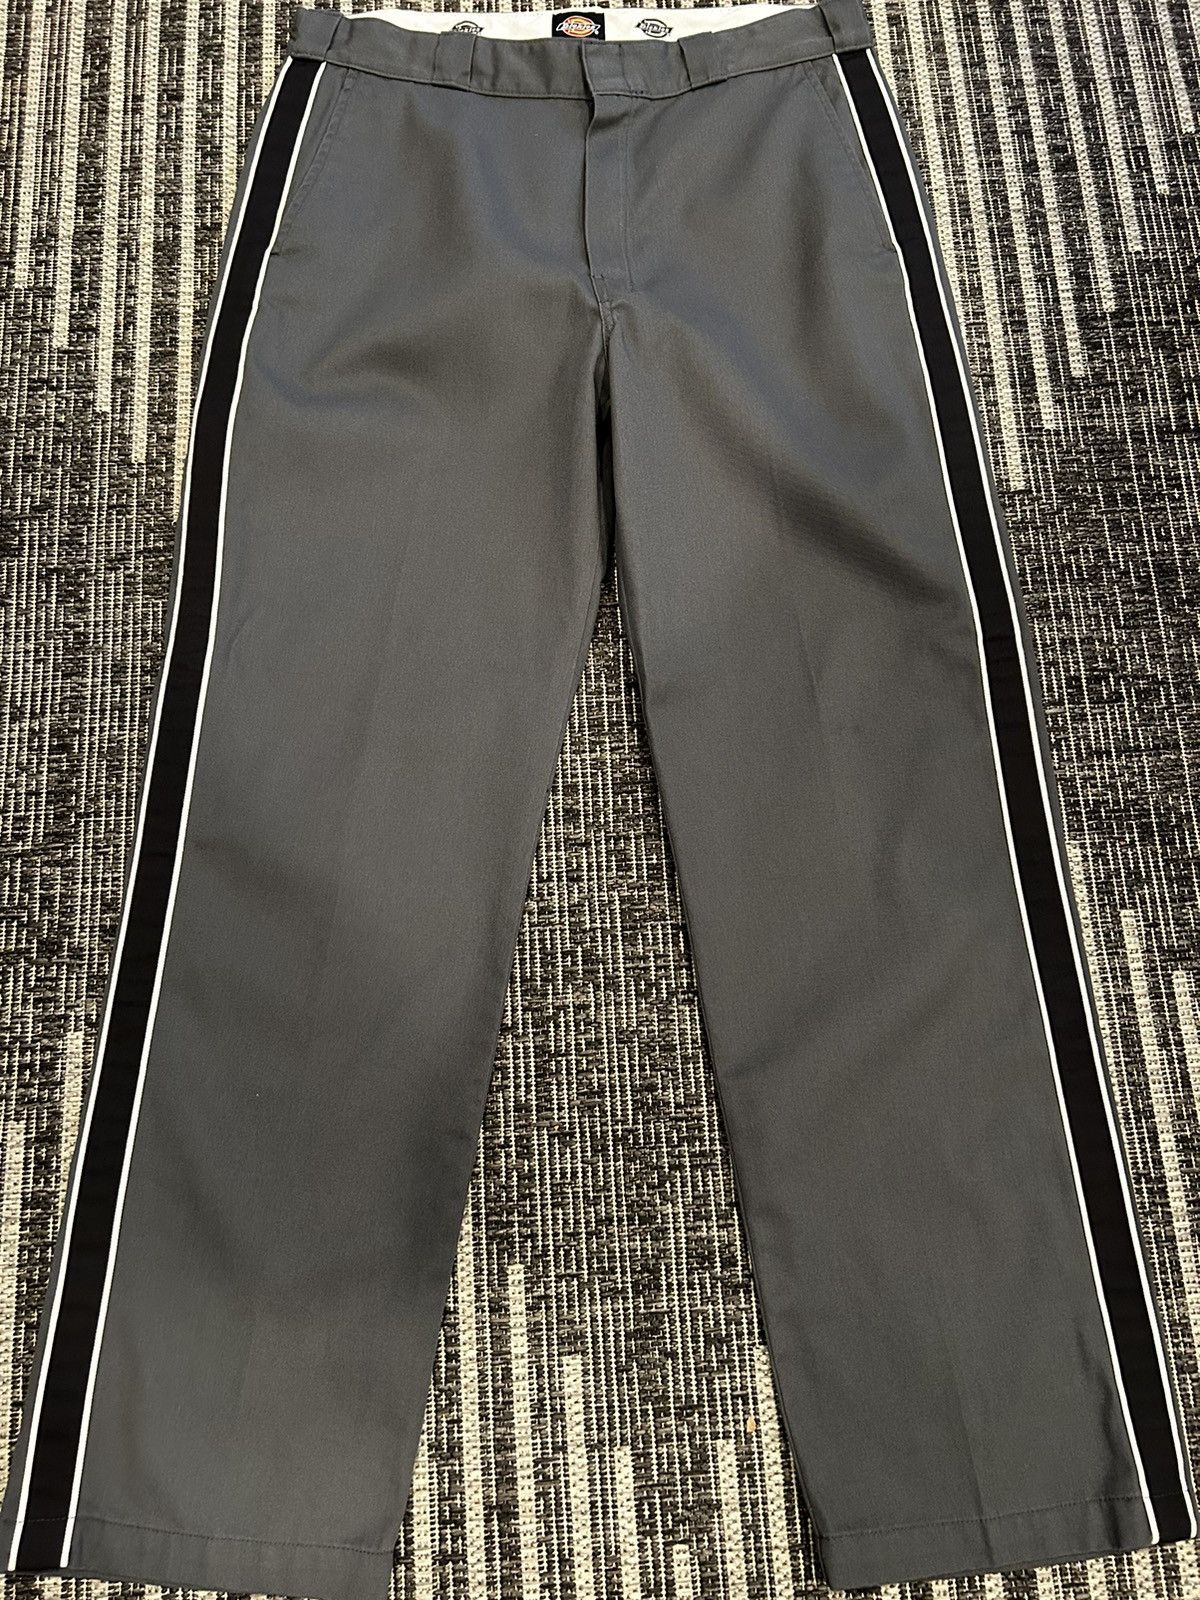 Supreme Supreme dickies stripe 874 work pants charcoal | Grailed